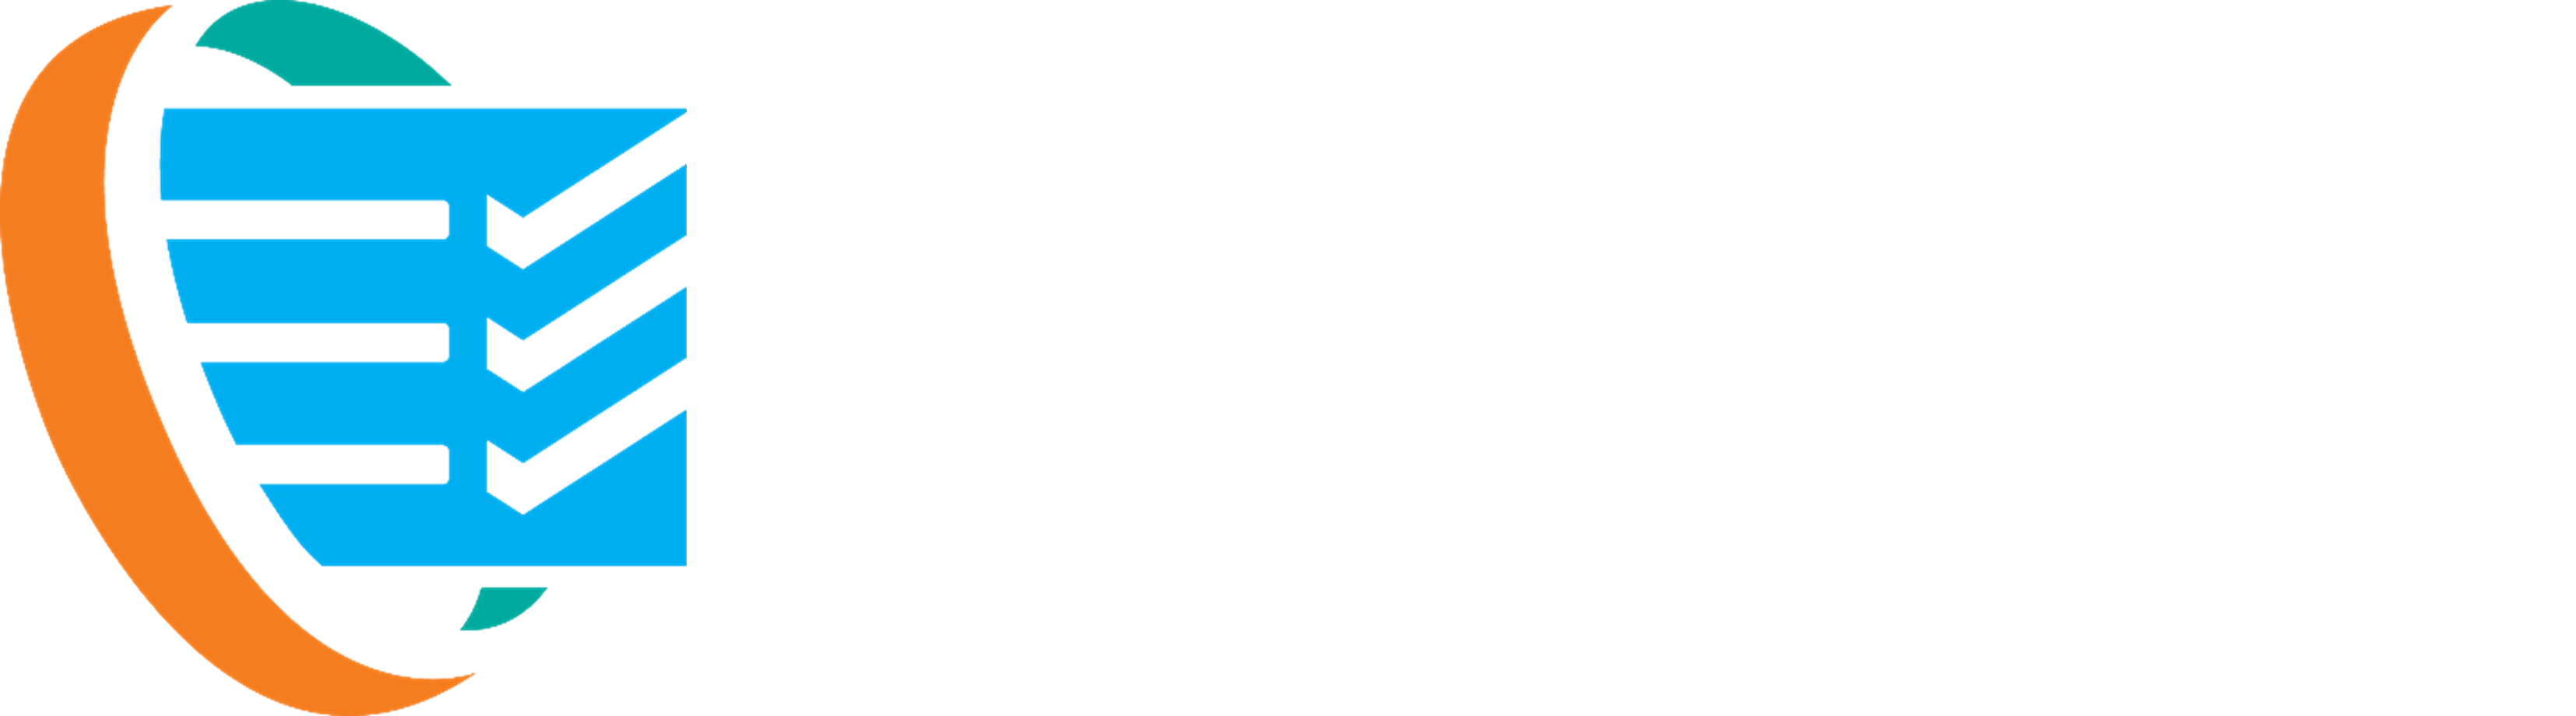 Safety Culture Diagnostic